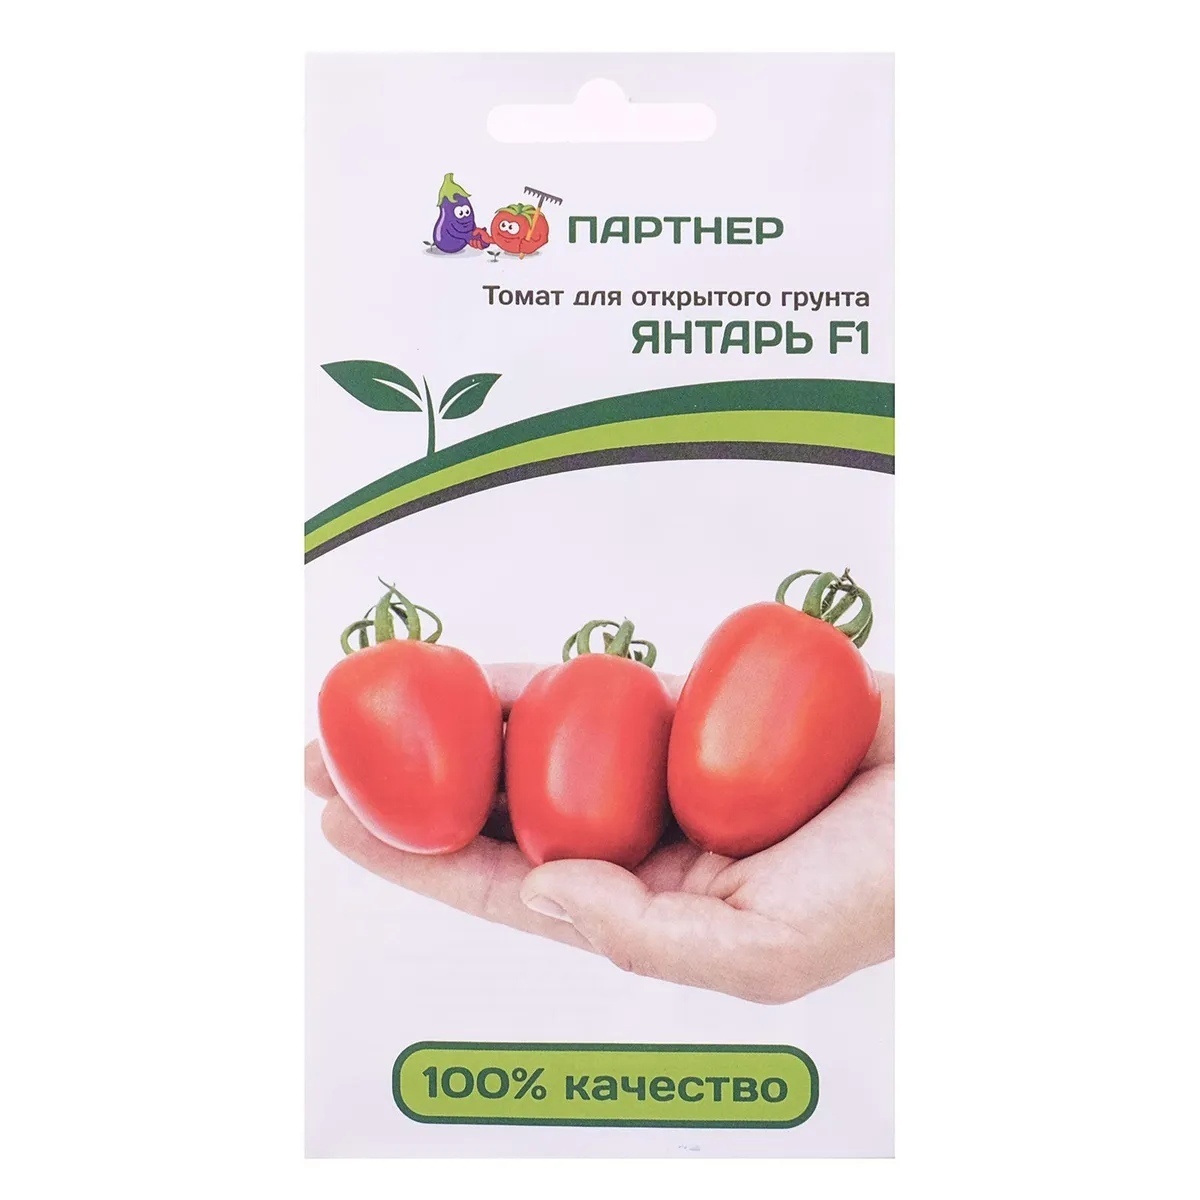 Партнер томат янтарь f1